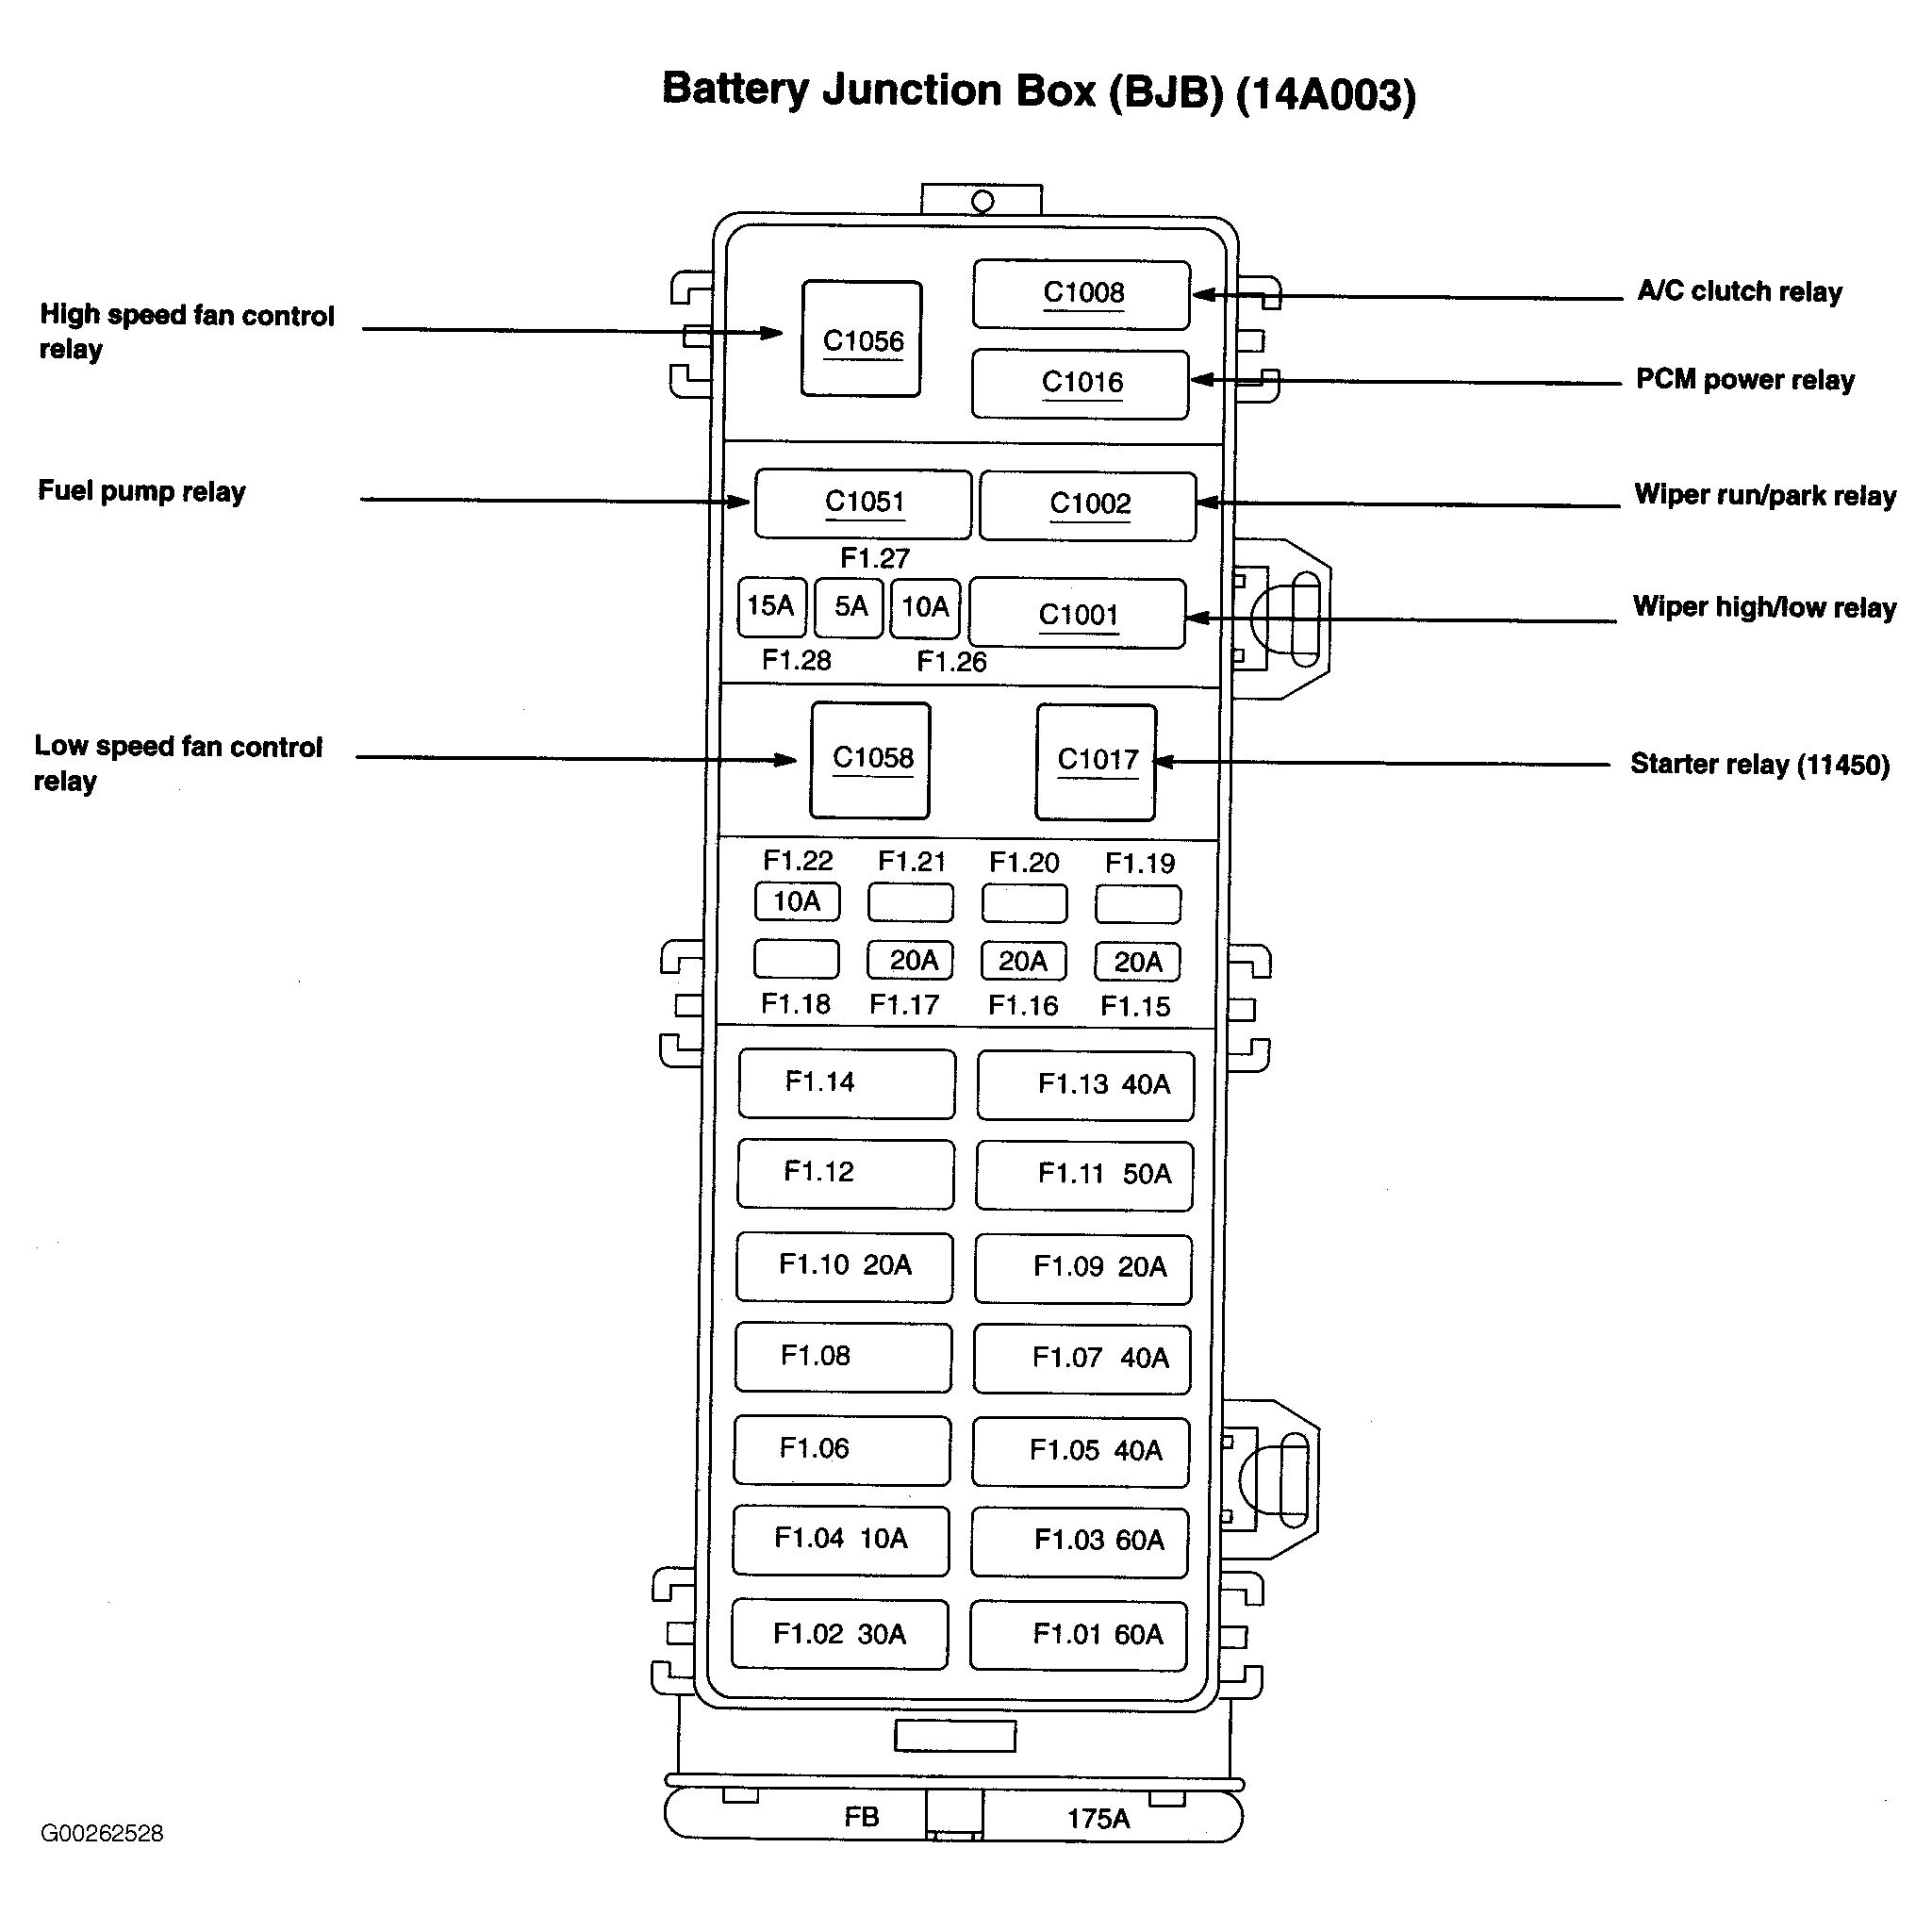 Fuse Box In 2001 Mercury Sable - Wiring Diagram